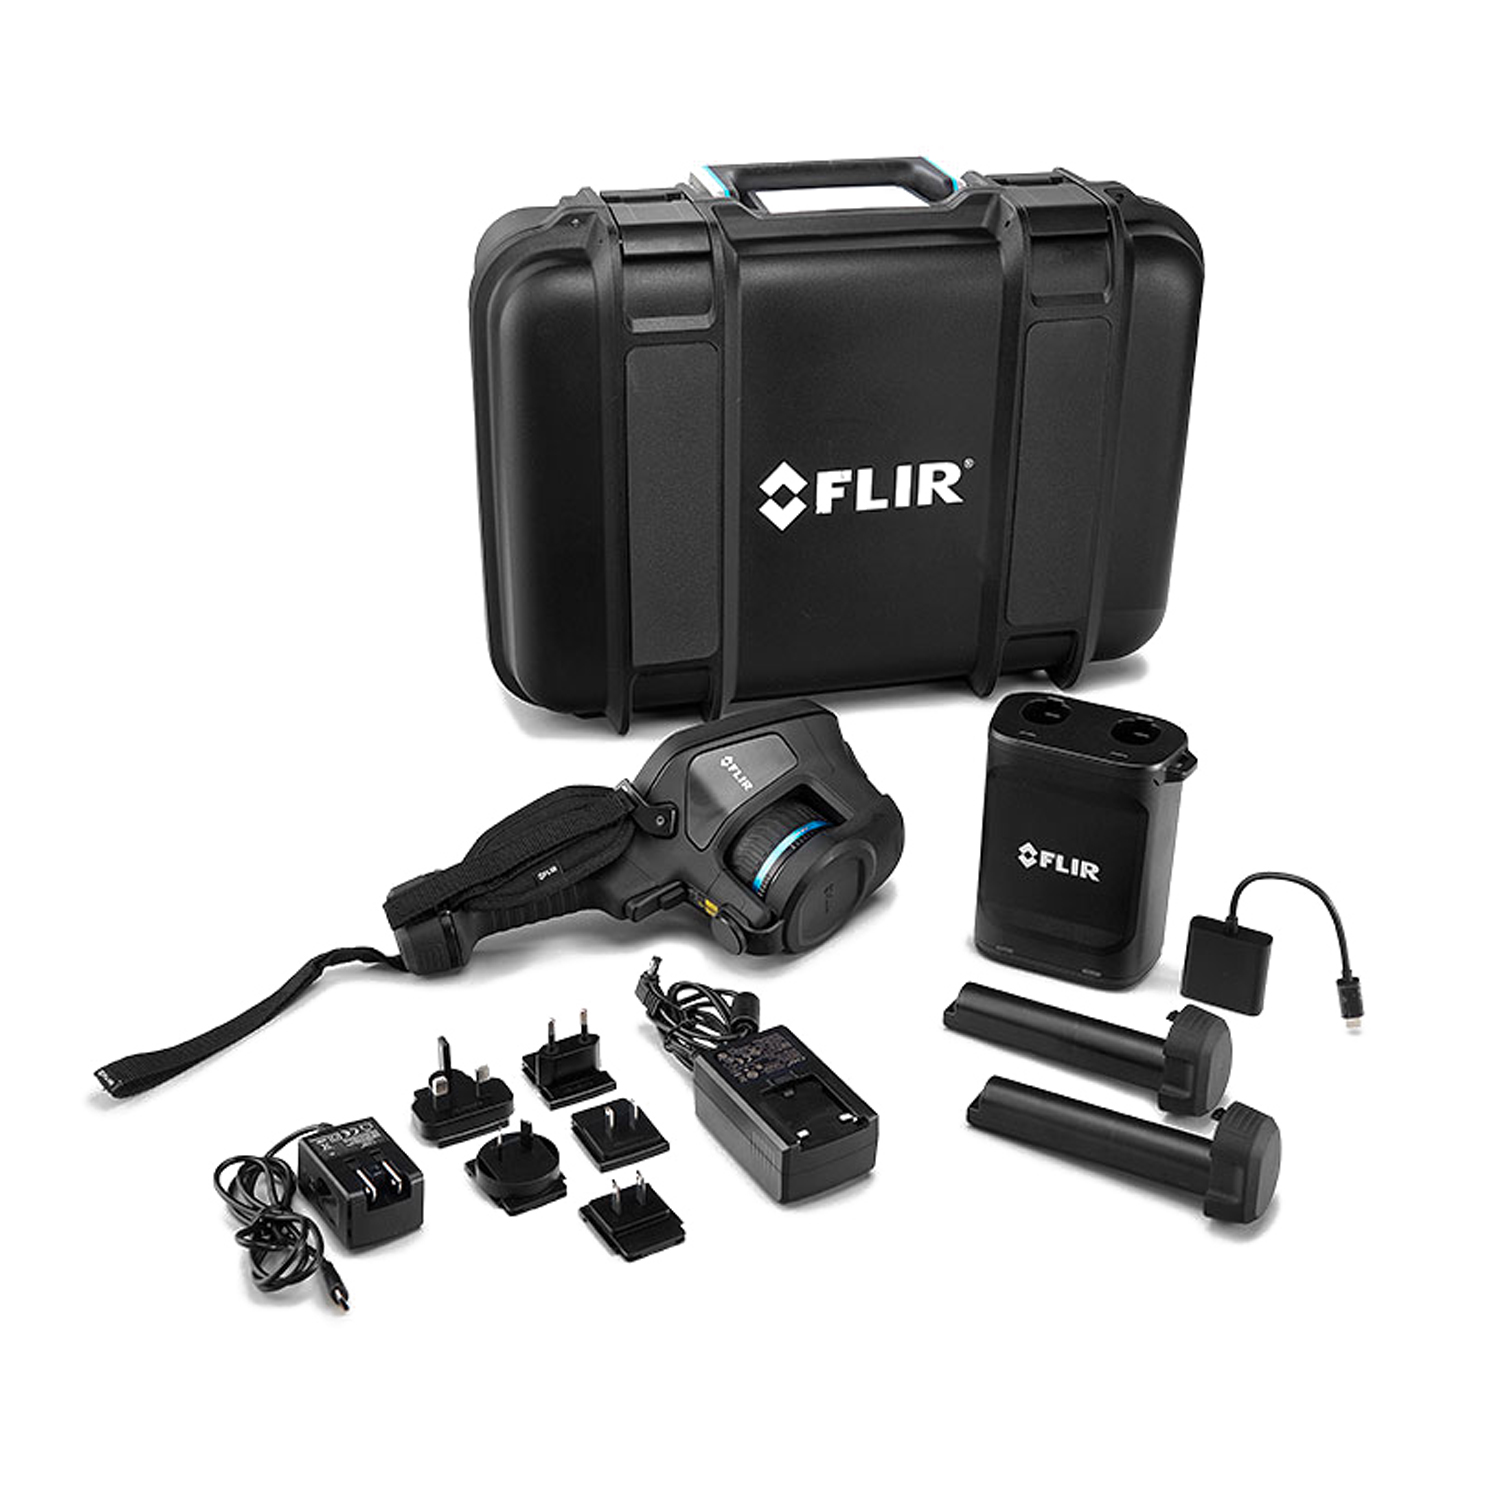 FLIR Thermal Systems: Cameras